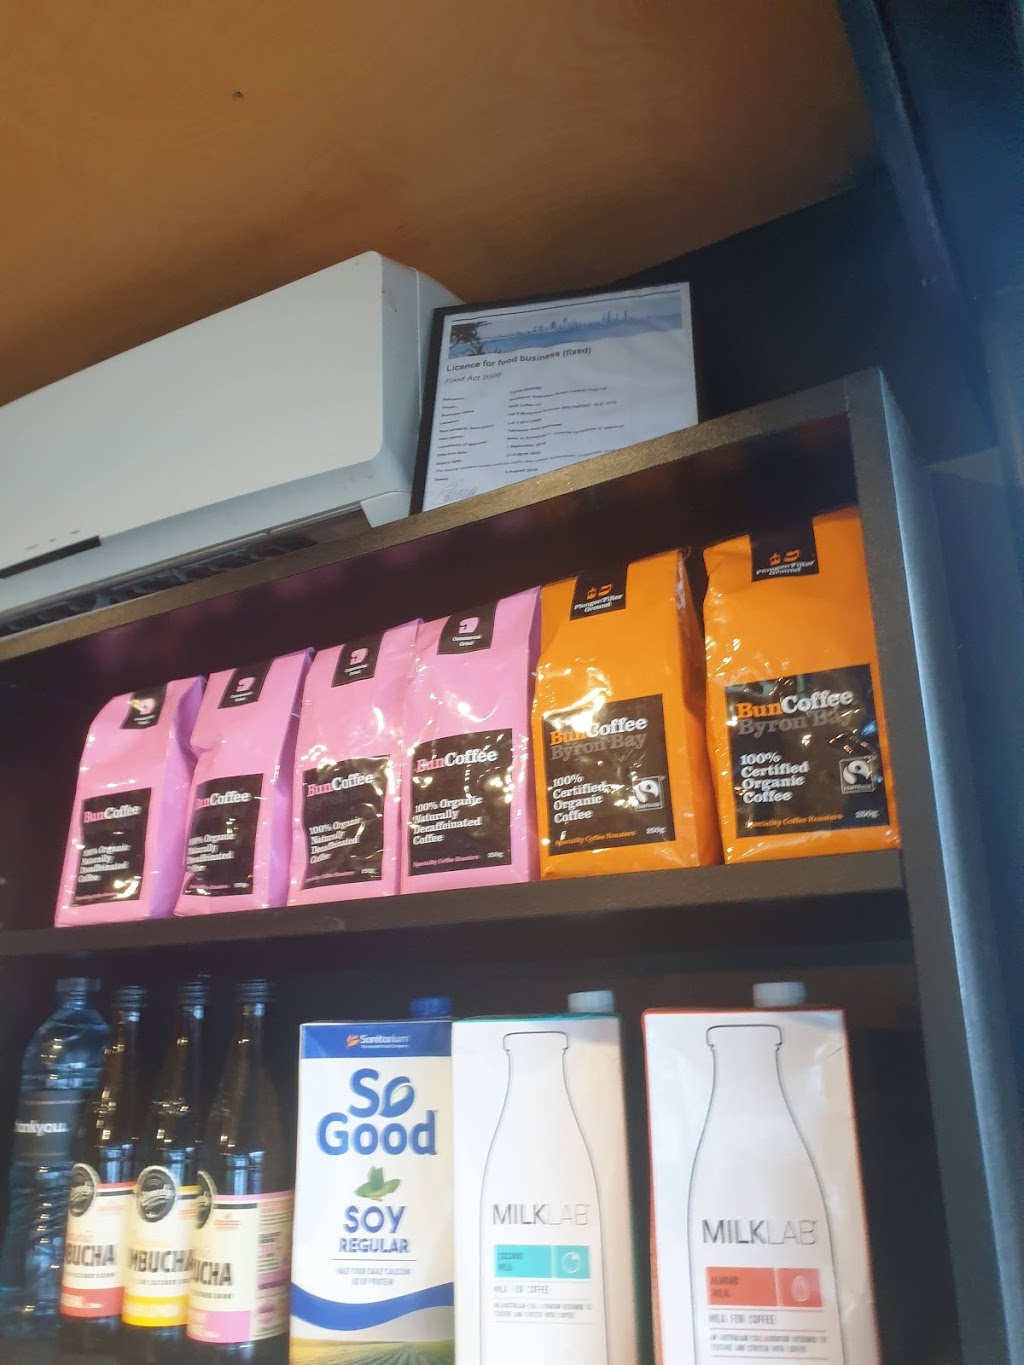 Box Coffee Co | Olsen Ave &, Melia Ct, Southport QLD 4215, Australia | Phone: (07) 4790 7165